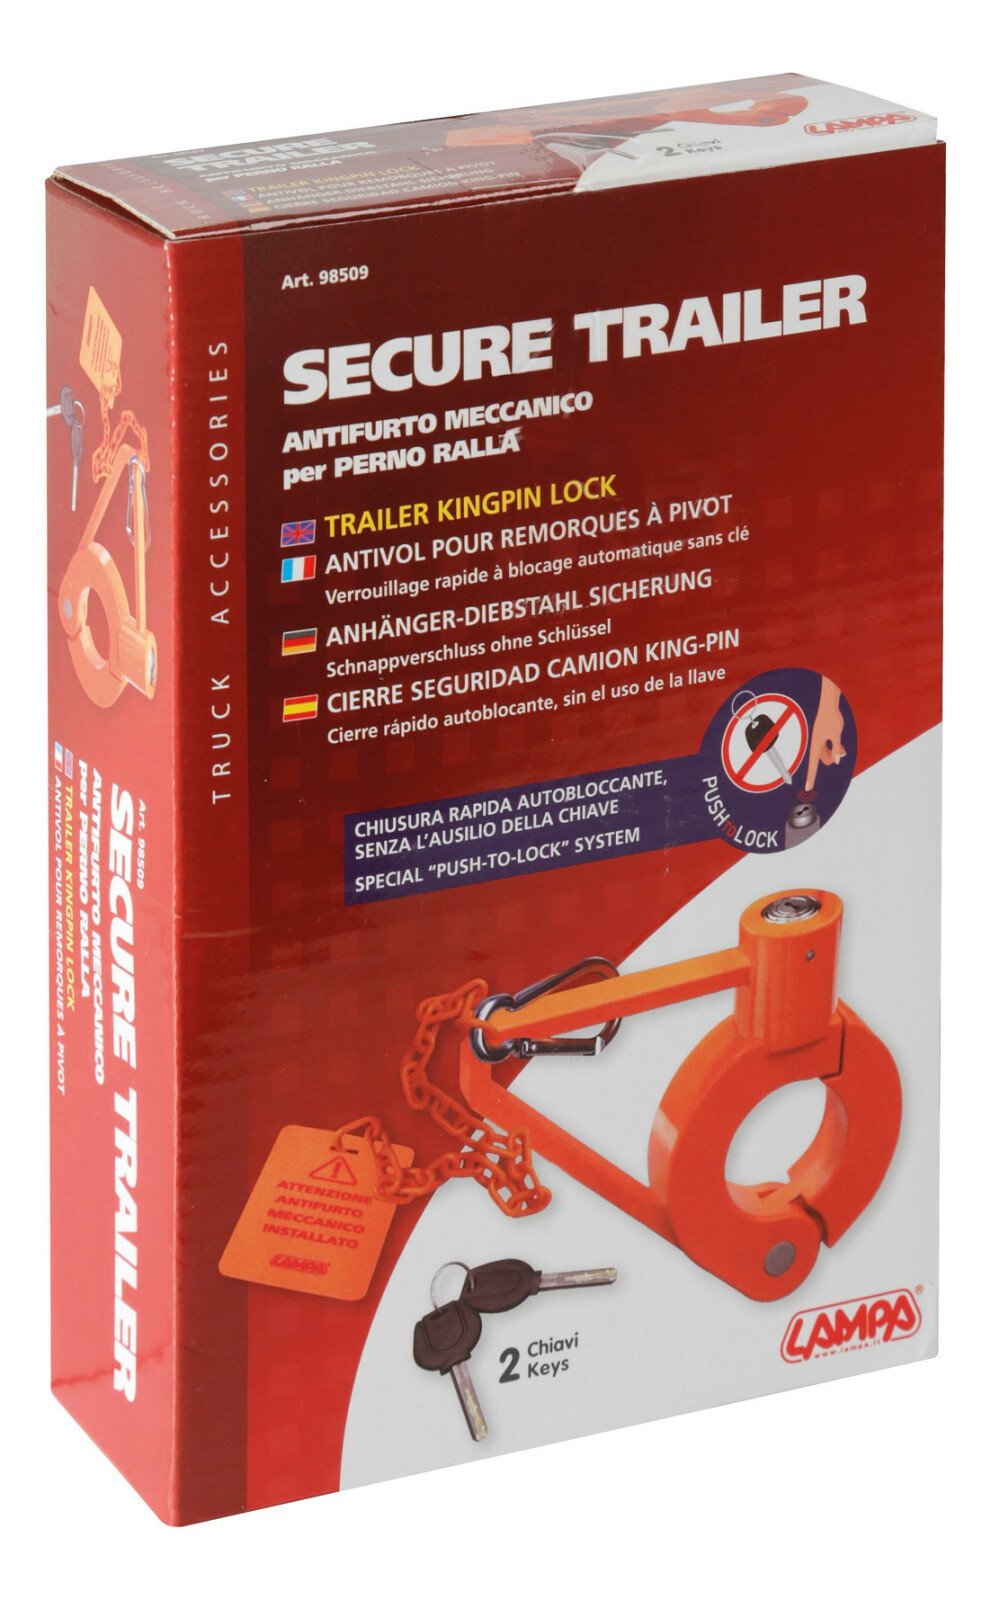 Secure Trailer, trailer kingpin lock thumb